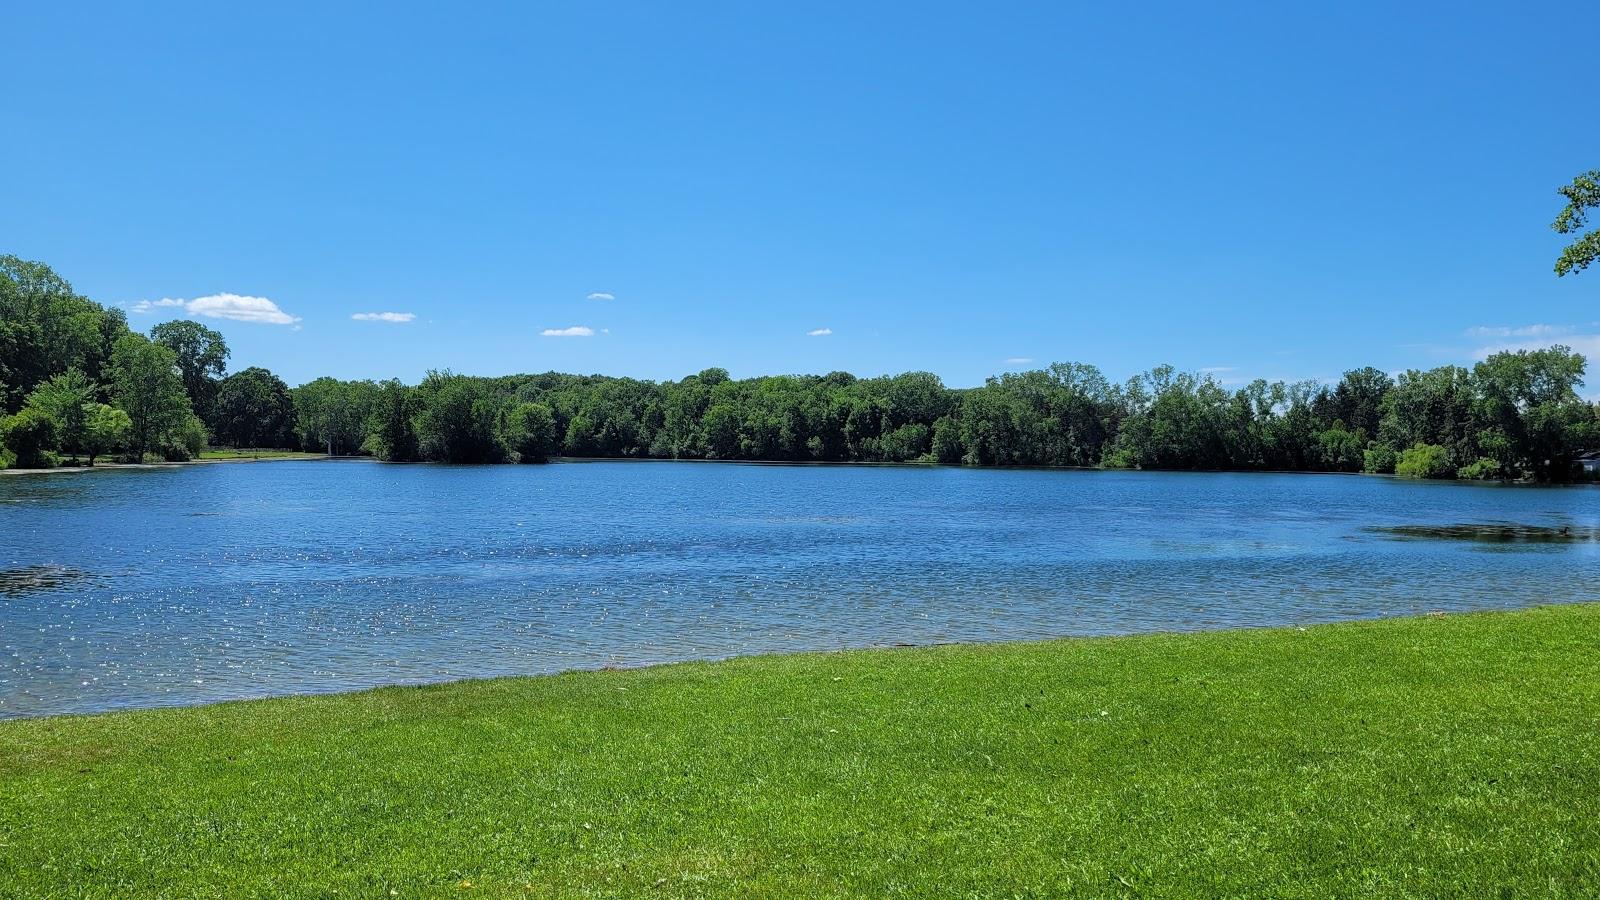 Sandee - Sylvan Glen Lake Park